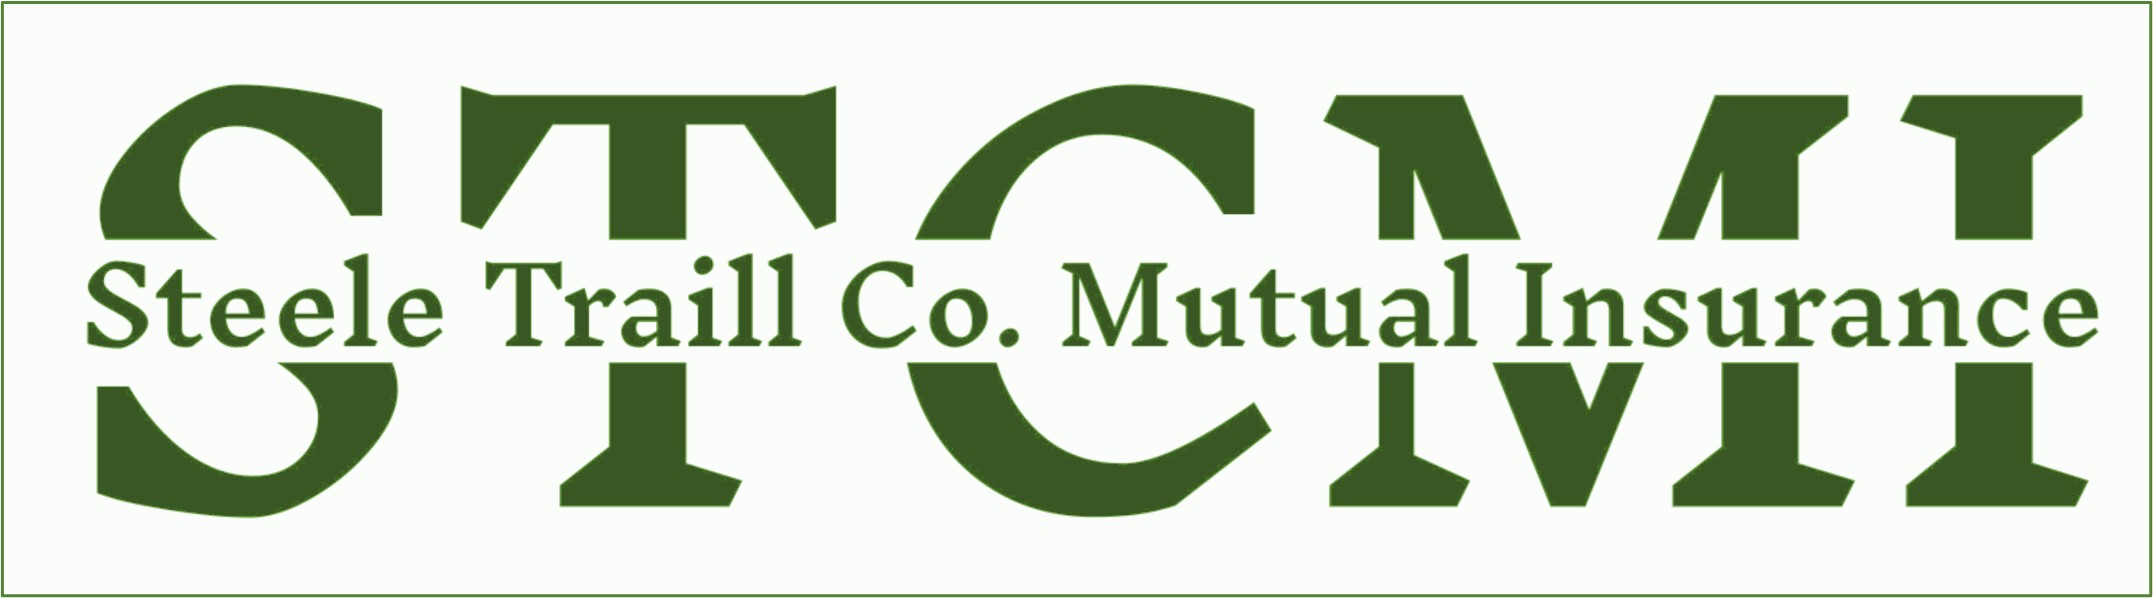 Steele Traill County Mutual Insurance Company